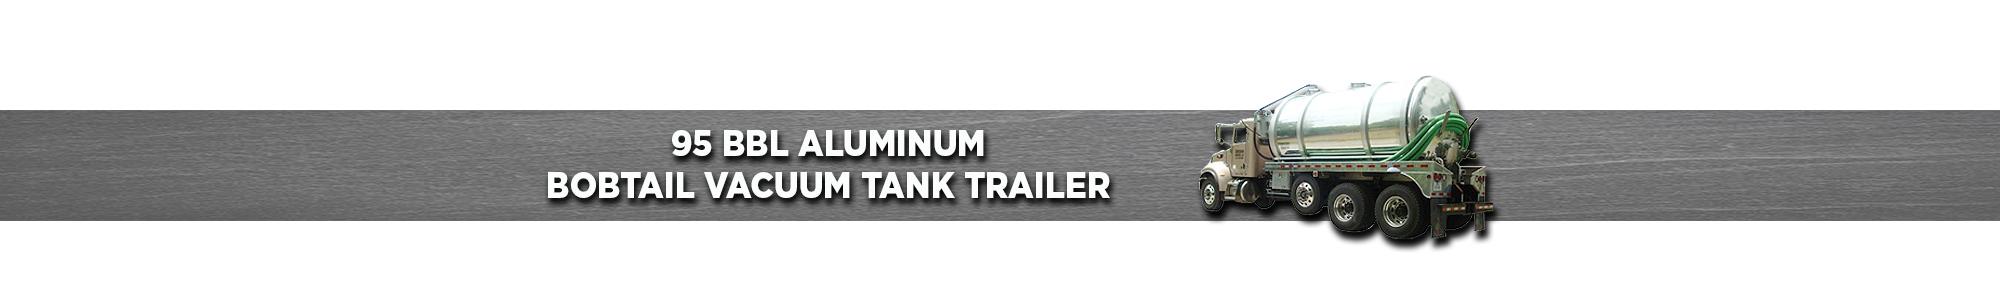 95 BBL Aluminum Bobtail Tank Trailer